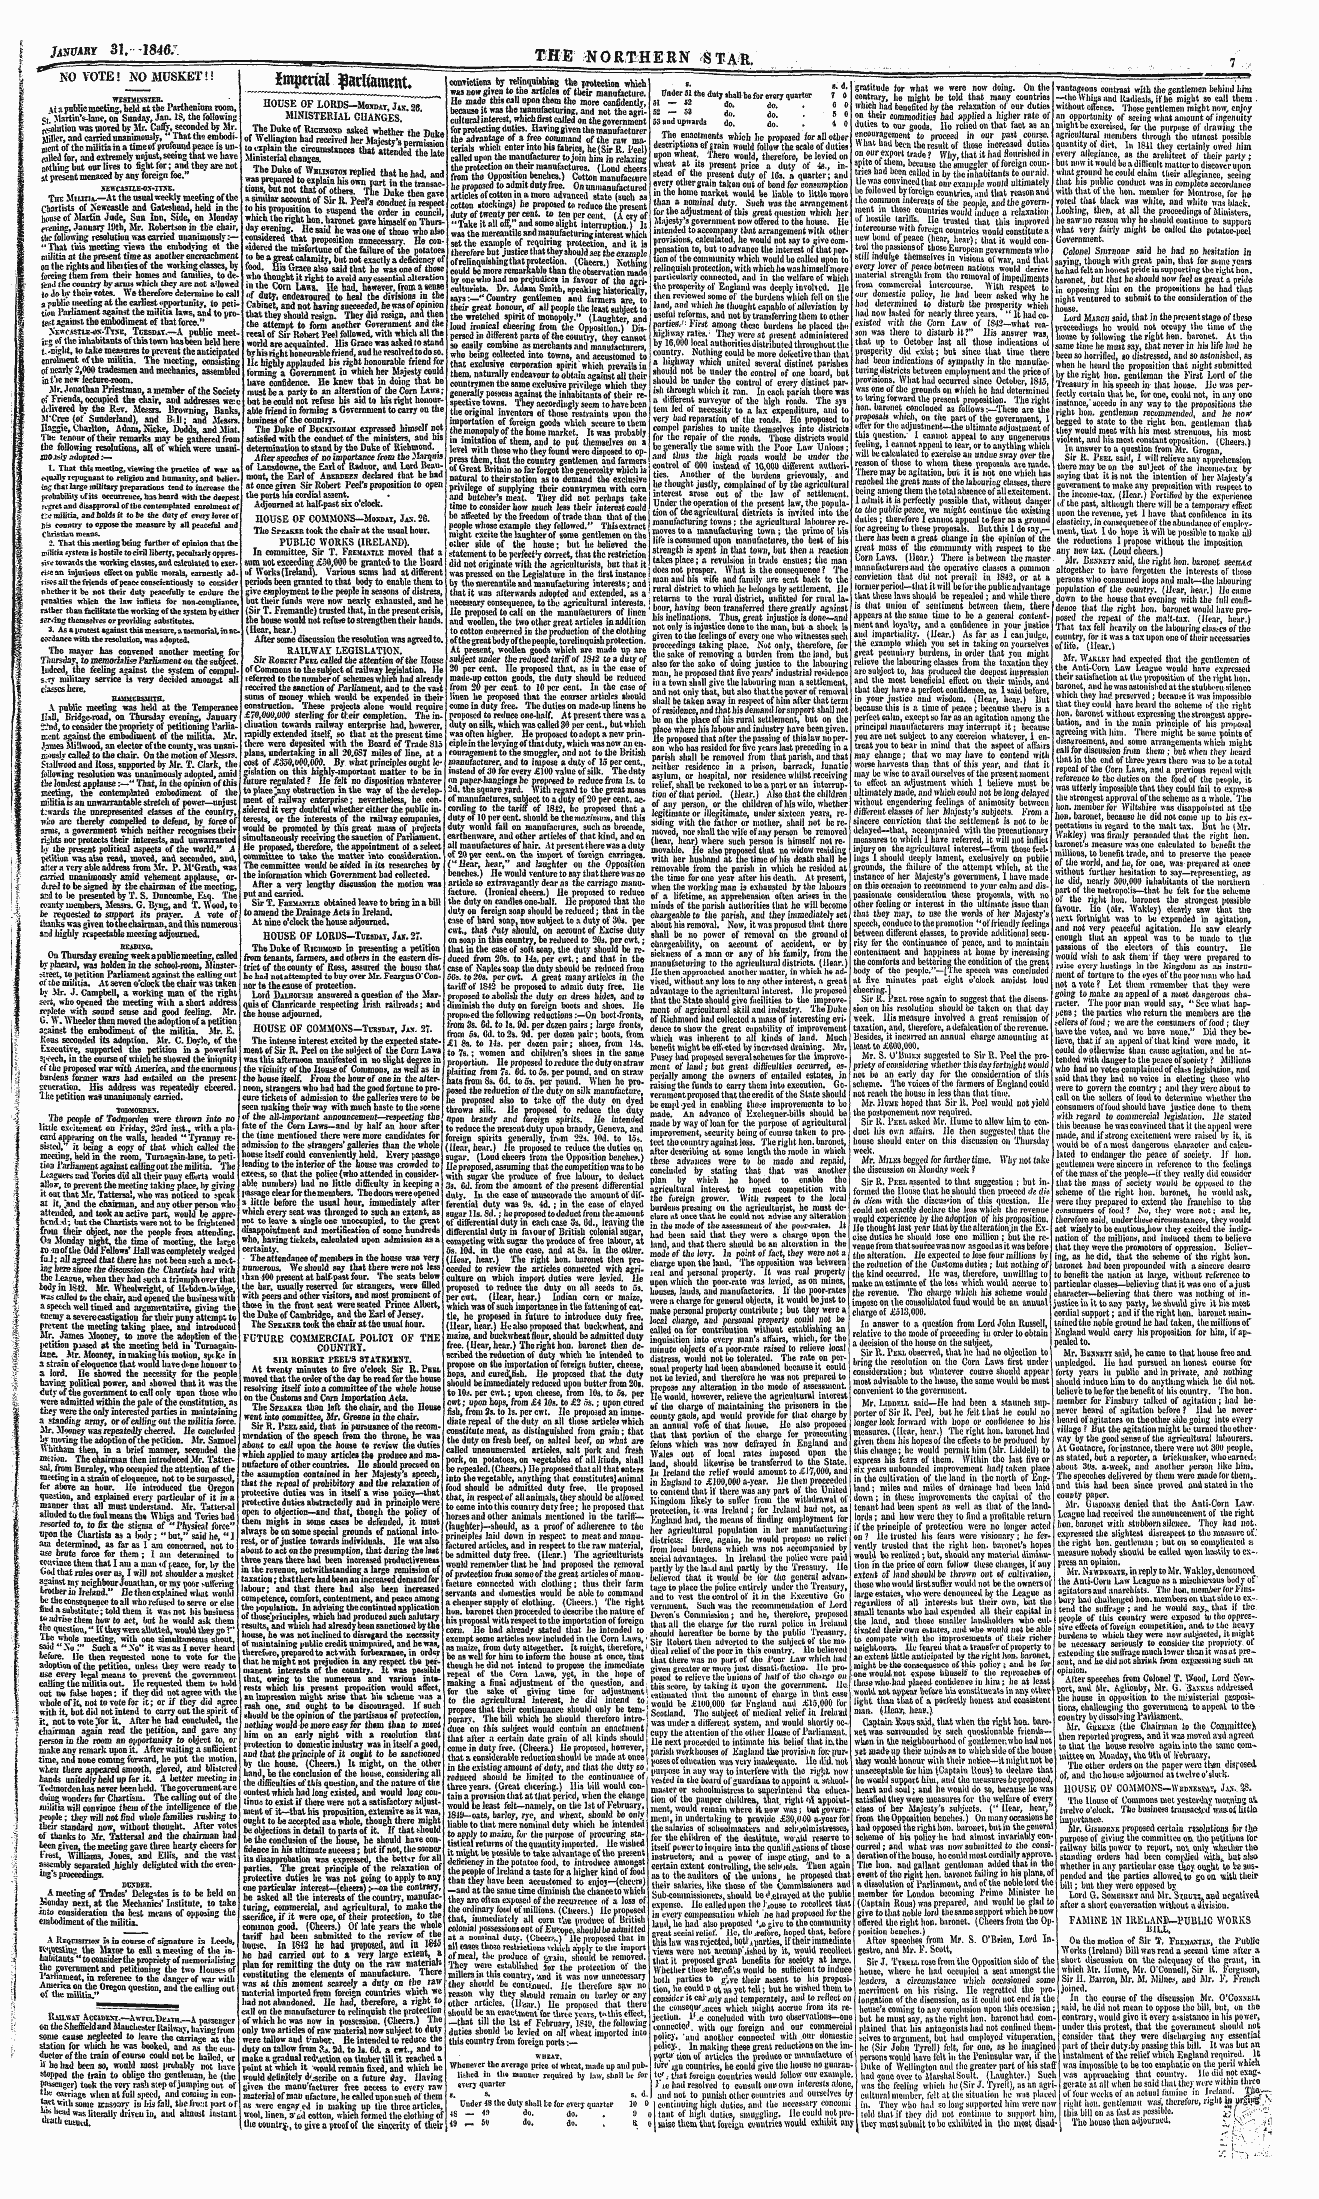 Northern Star (1837-1852): jS F Y, 2nd edition - Within Three Ireland, Jpta-R-: Ht W Urgu...